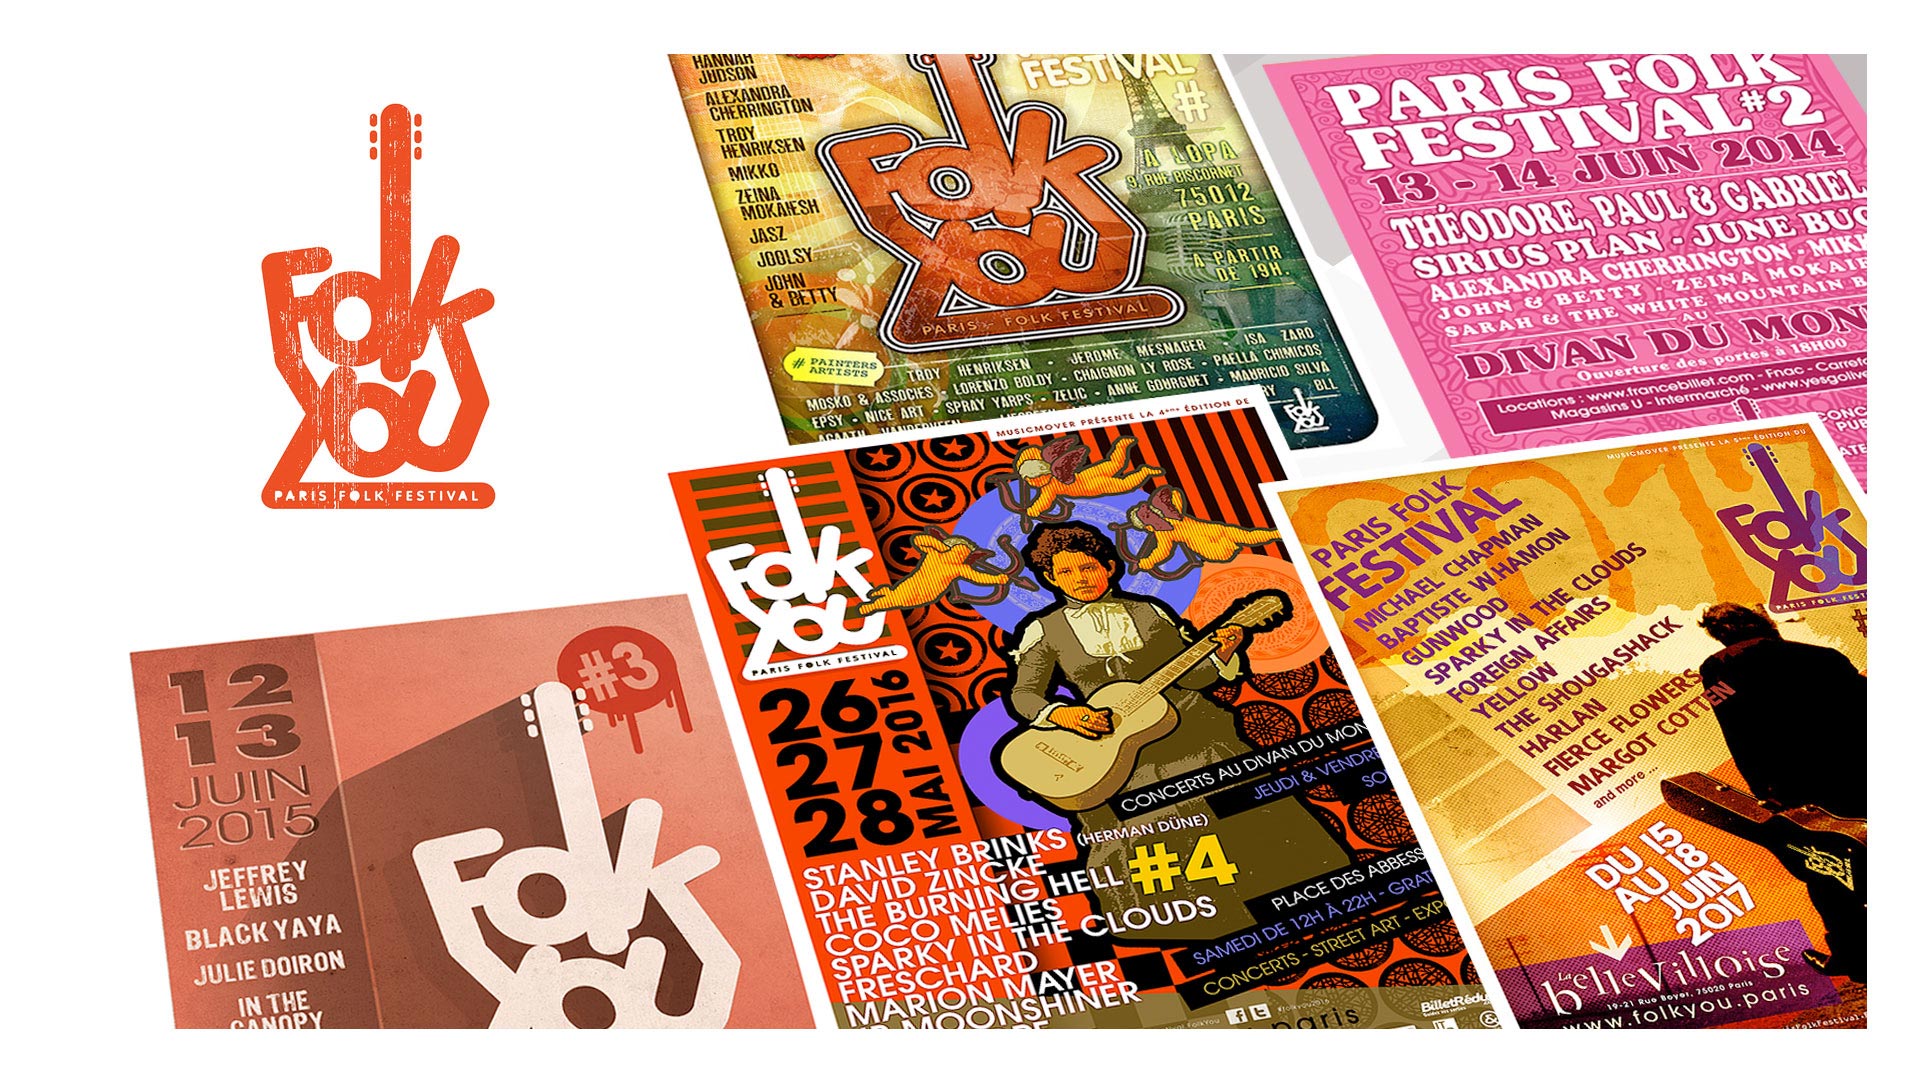 Logo - Print - Web - Paris Folk Festival - Folk you